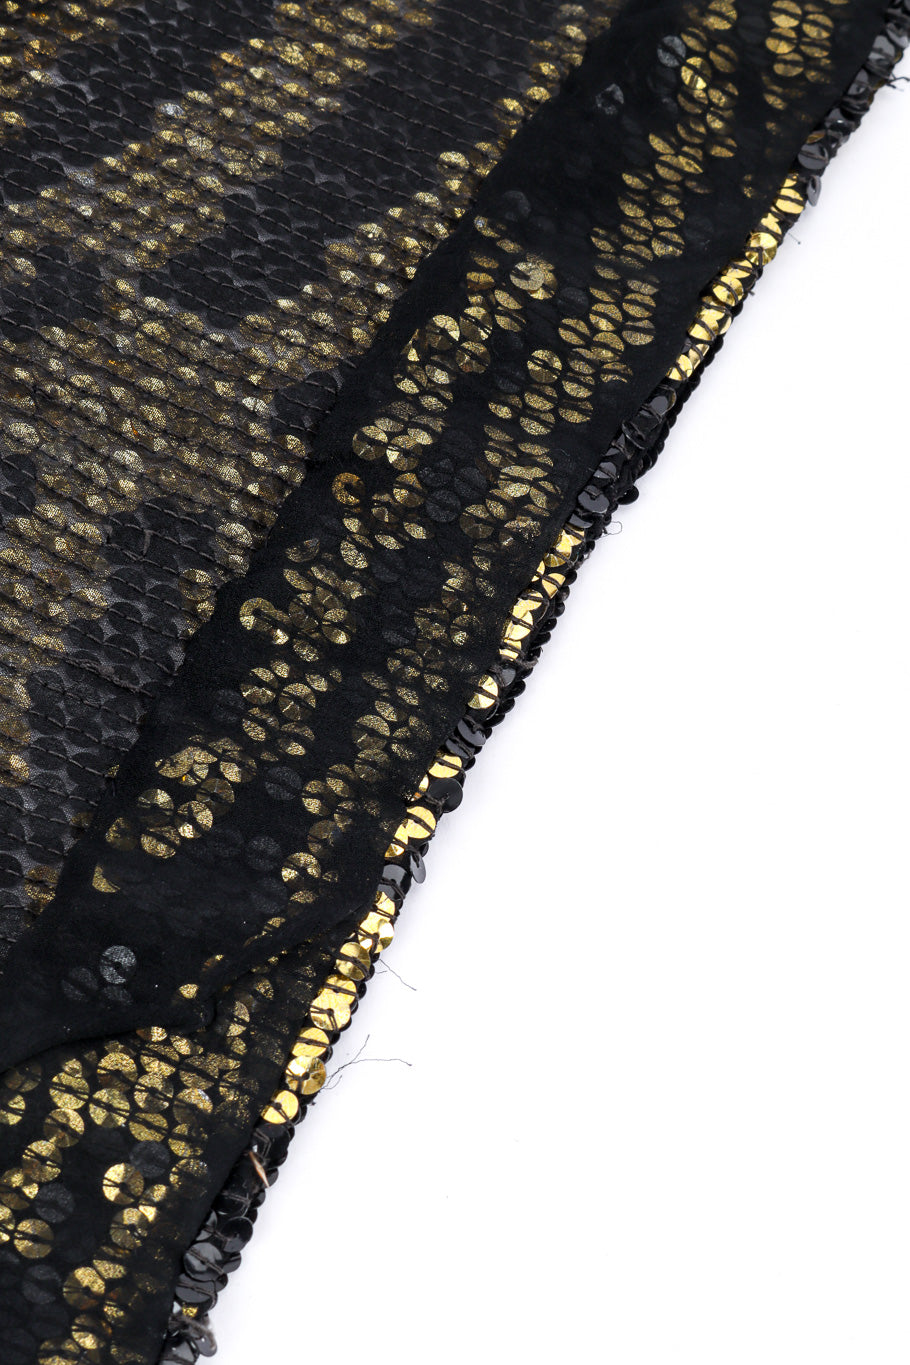 Vintage Halston Tiger Sequin Sheath Gown bottom hem closeup @recessla